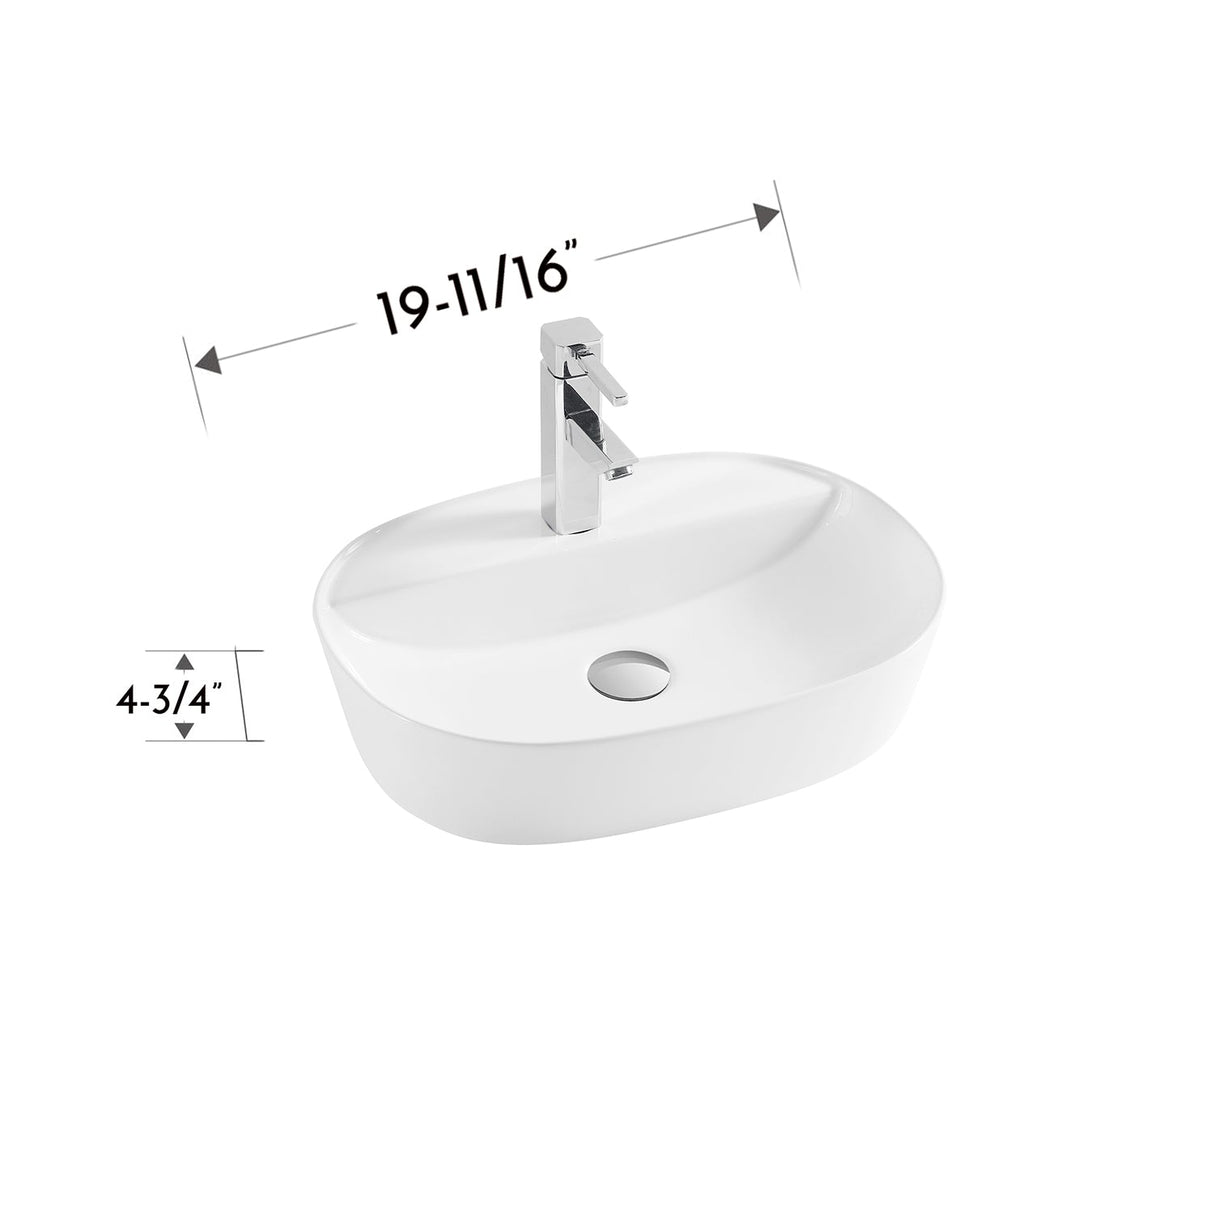 DAX Ceramic Oval Bathroom Vessel Basin, 20", White Matte DAX-CL1291-WM